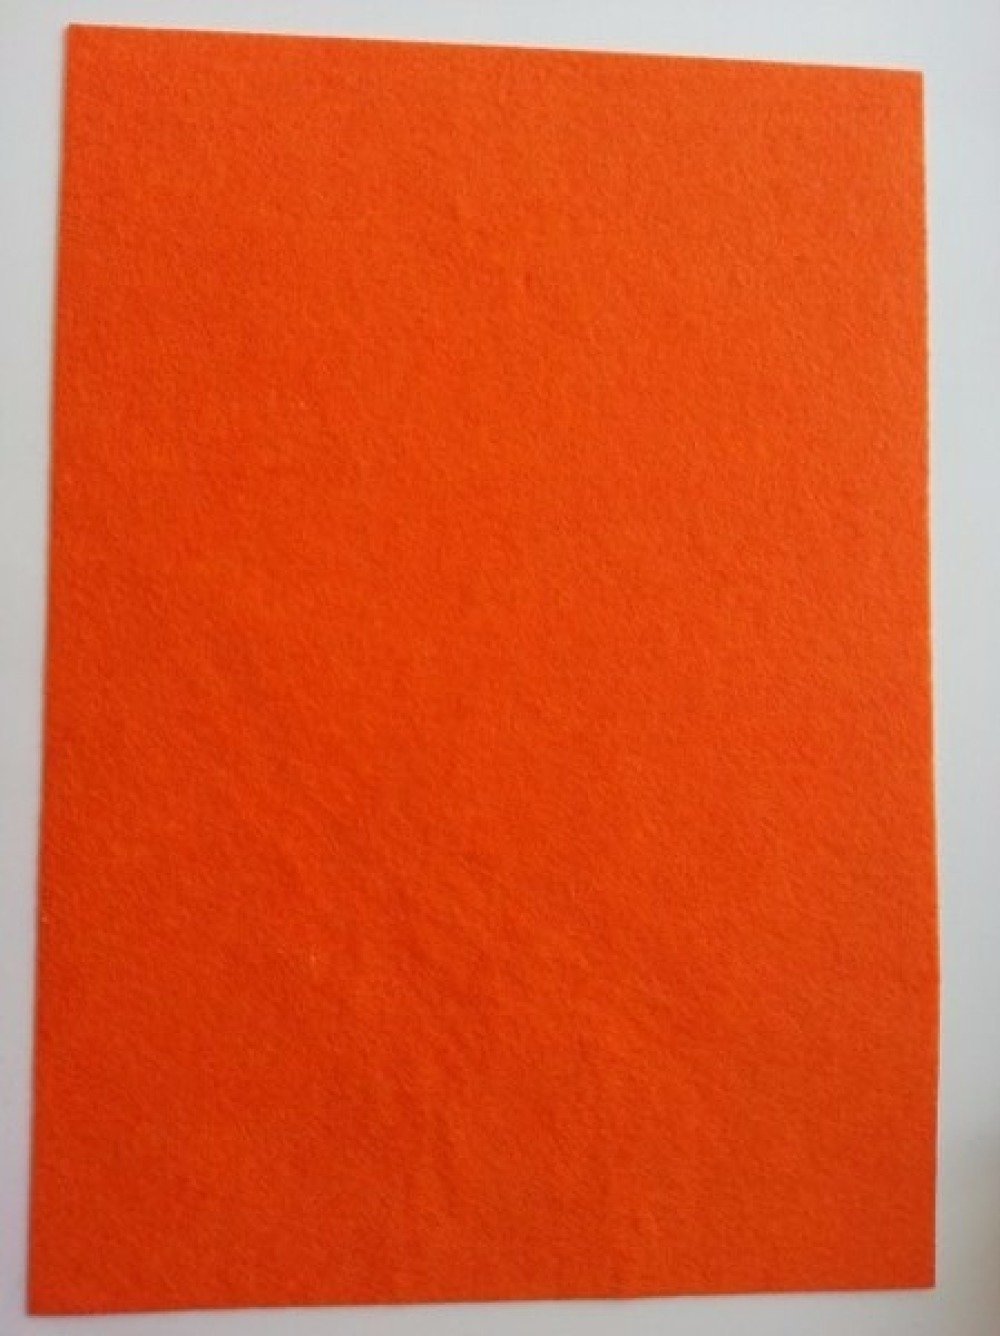 Feuille de feutrine autocollante orange 21*29.7cm - Un grand marché